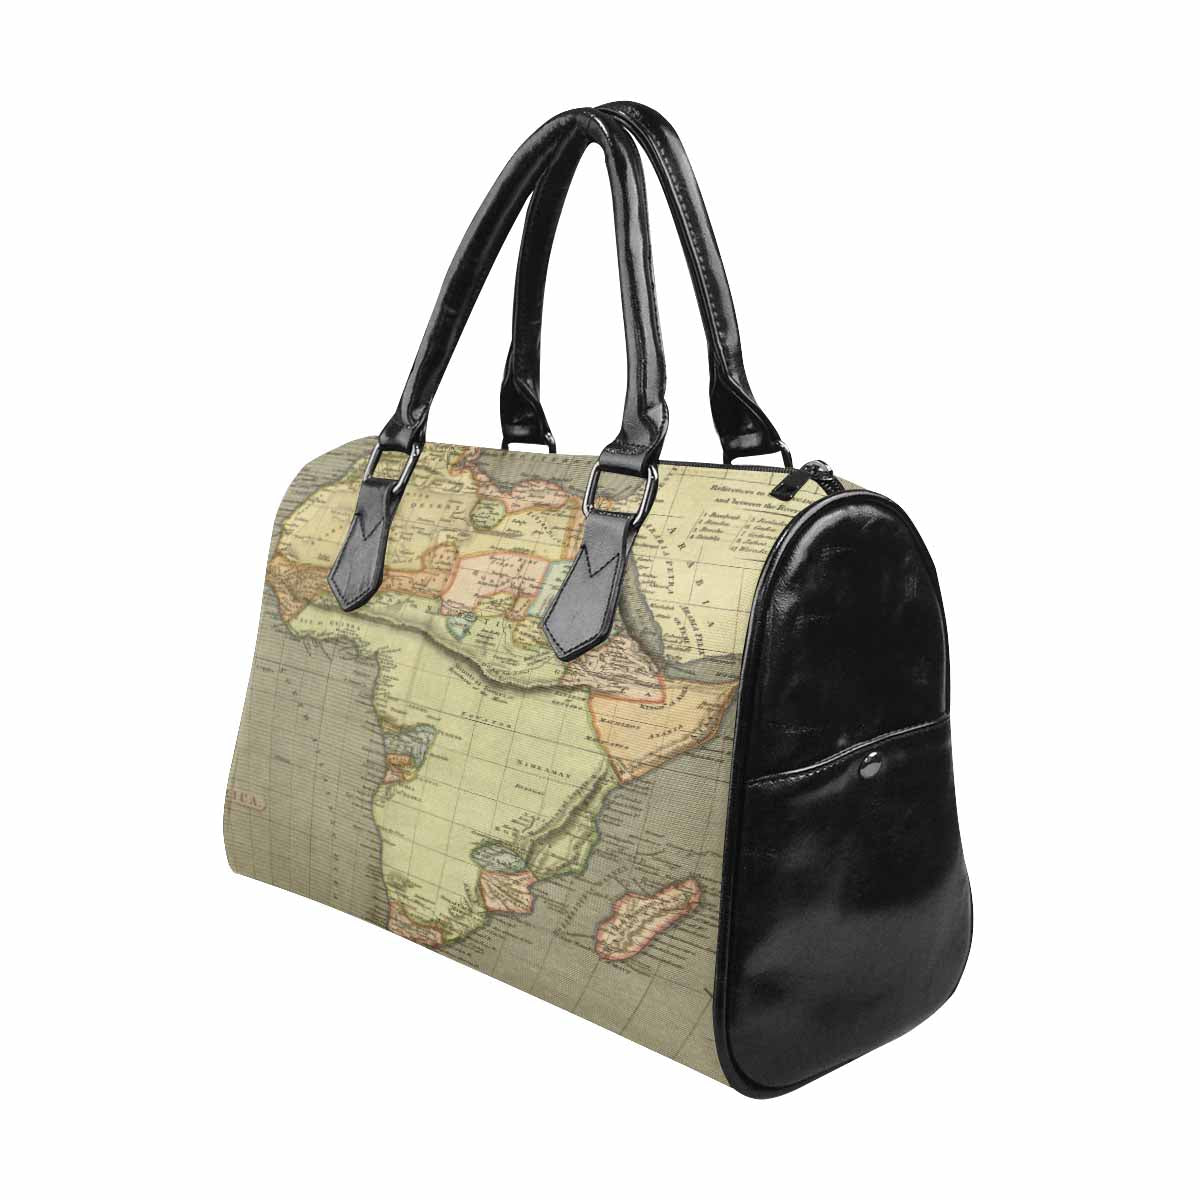 Antique Map design Boston handbag, Model 1695321, Design 4